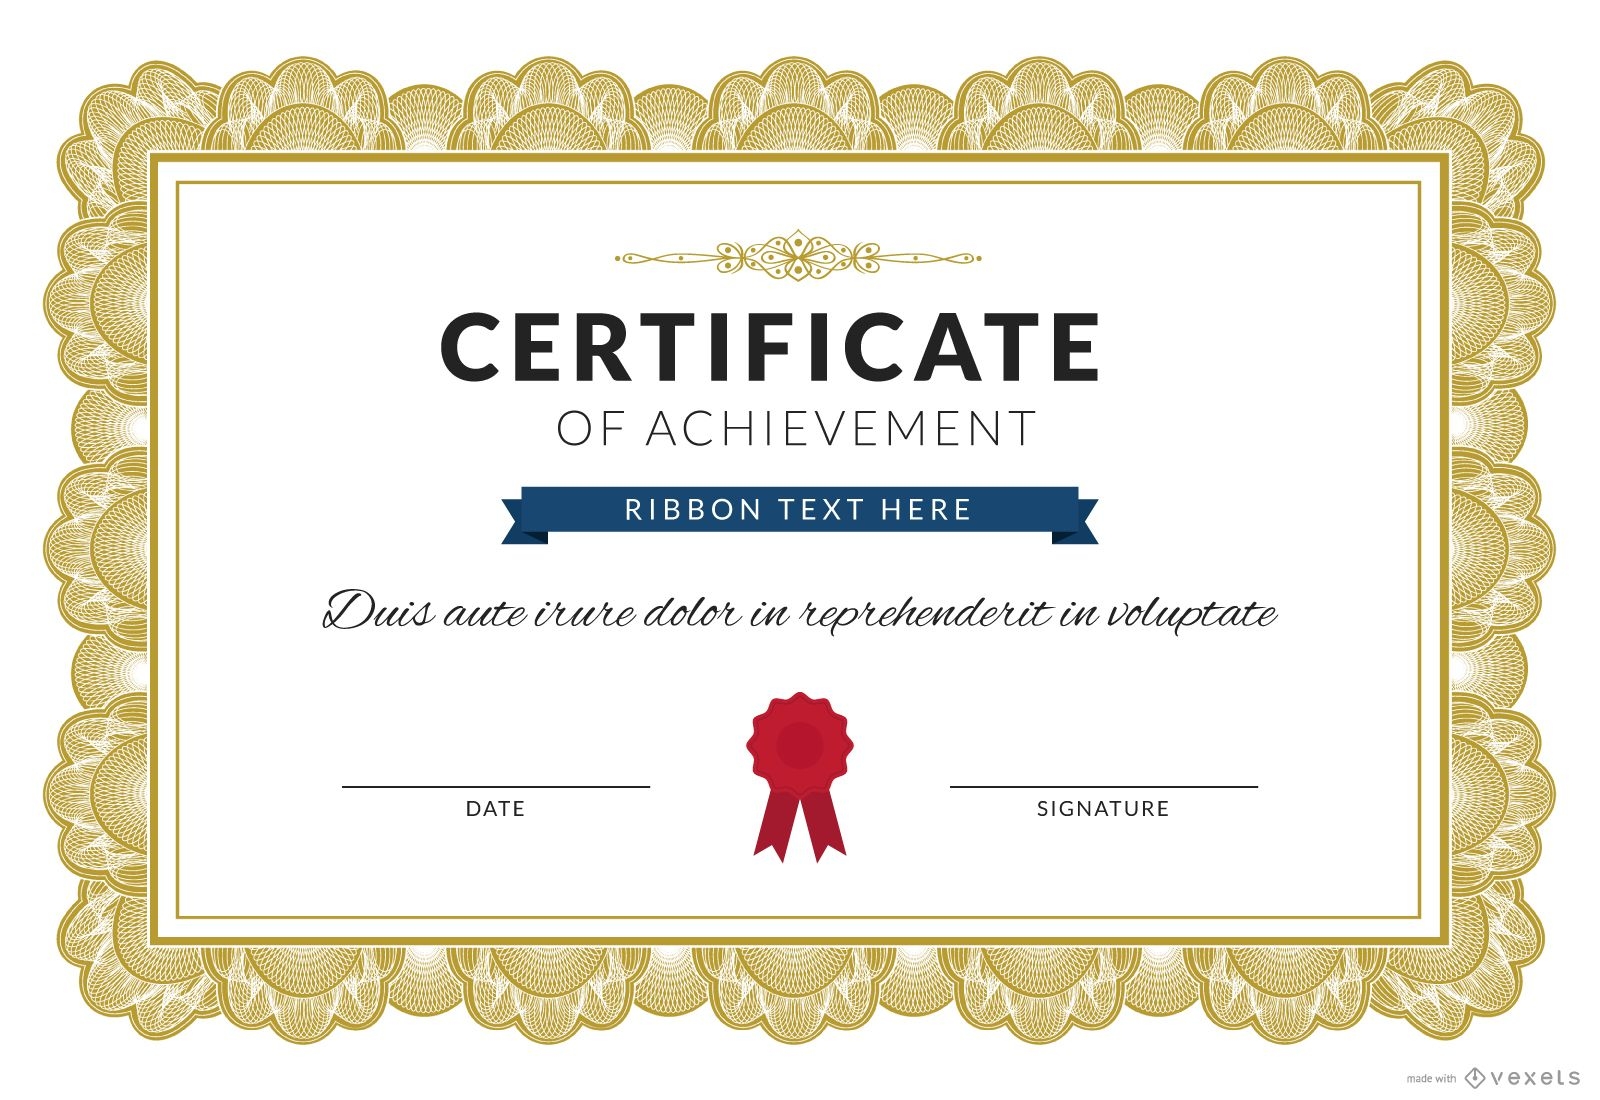 Certificate of achievement maker - Editable design